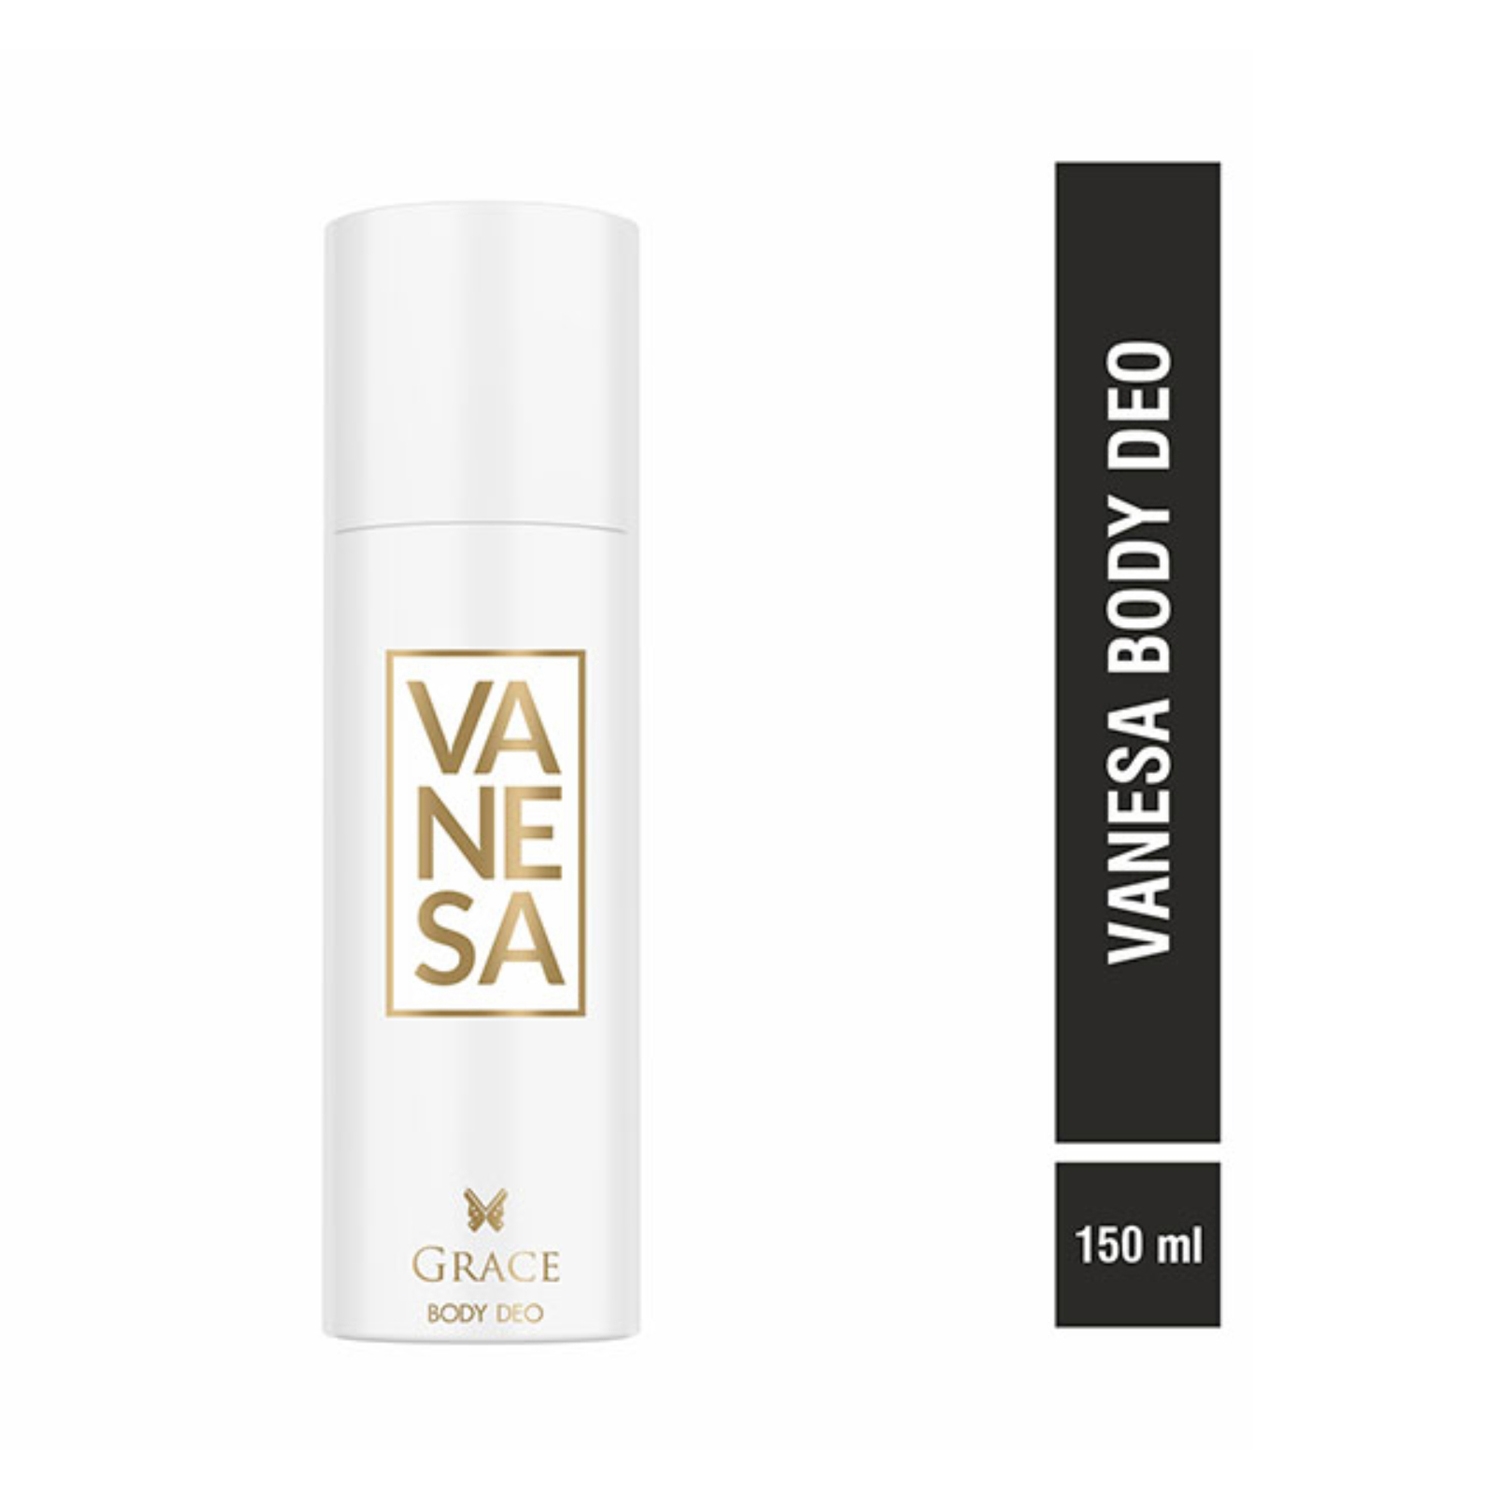 Vanesa | Vanesa Grace Deodorant Spray (150ml)